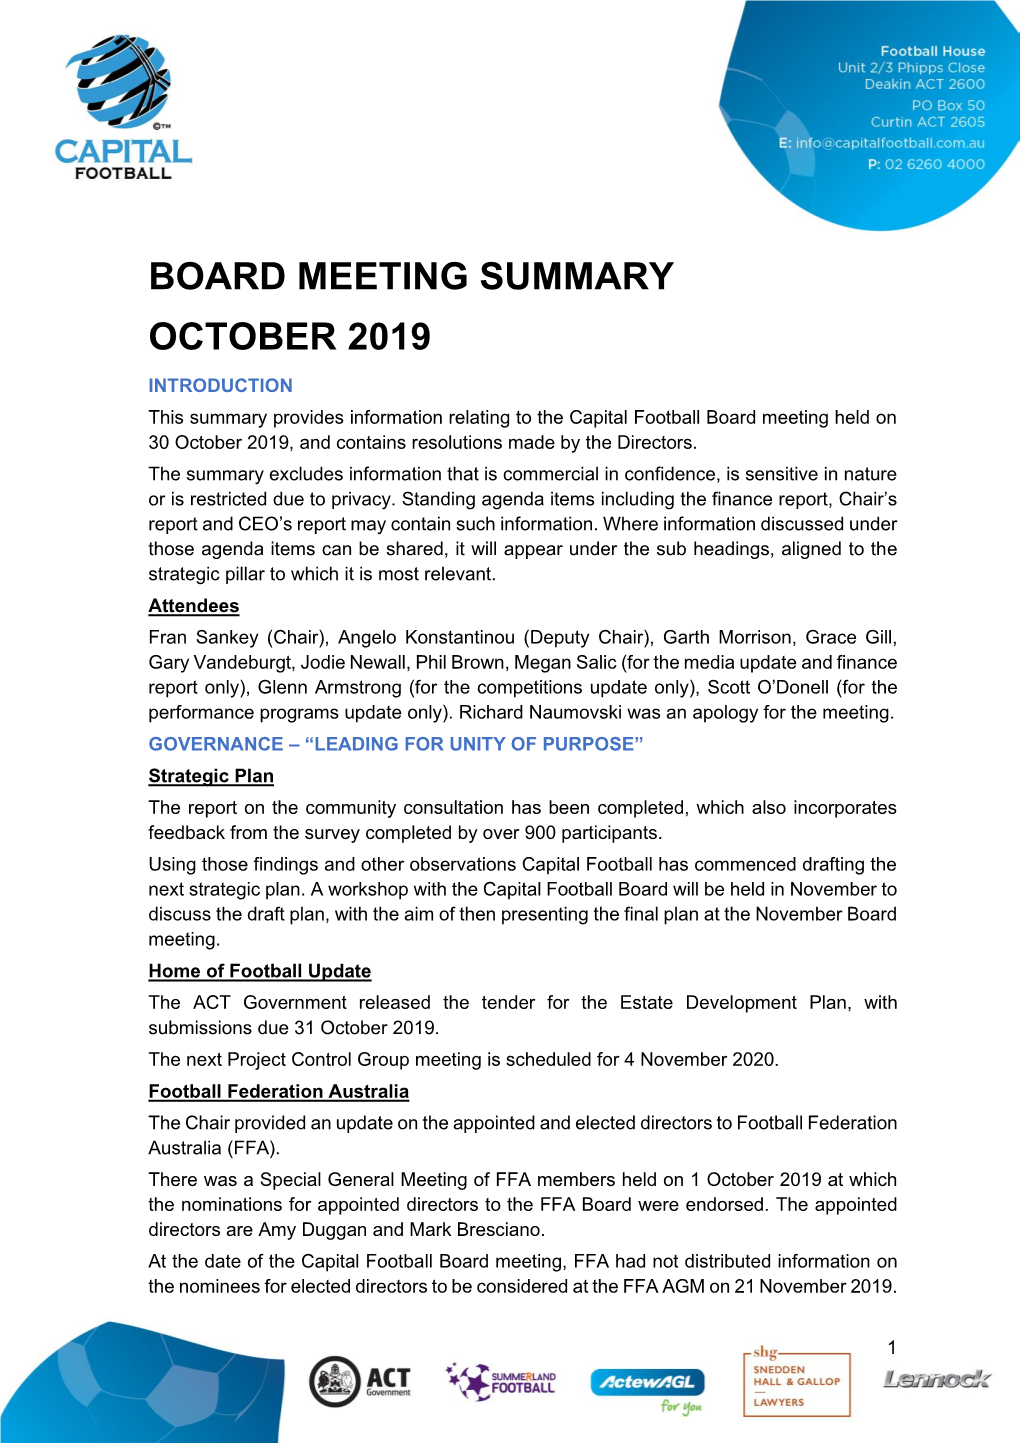 Board Meeting Summary October 2019